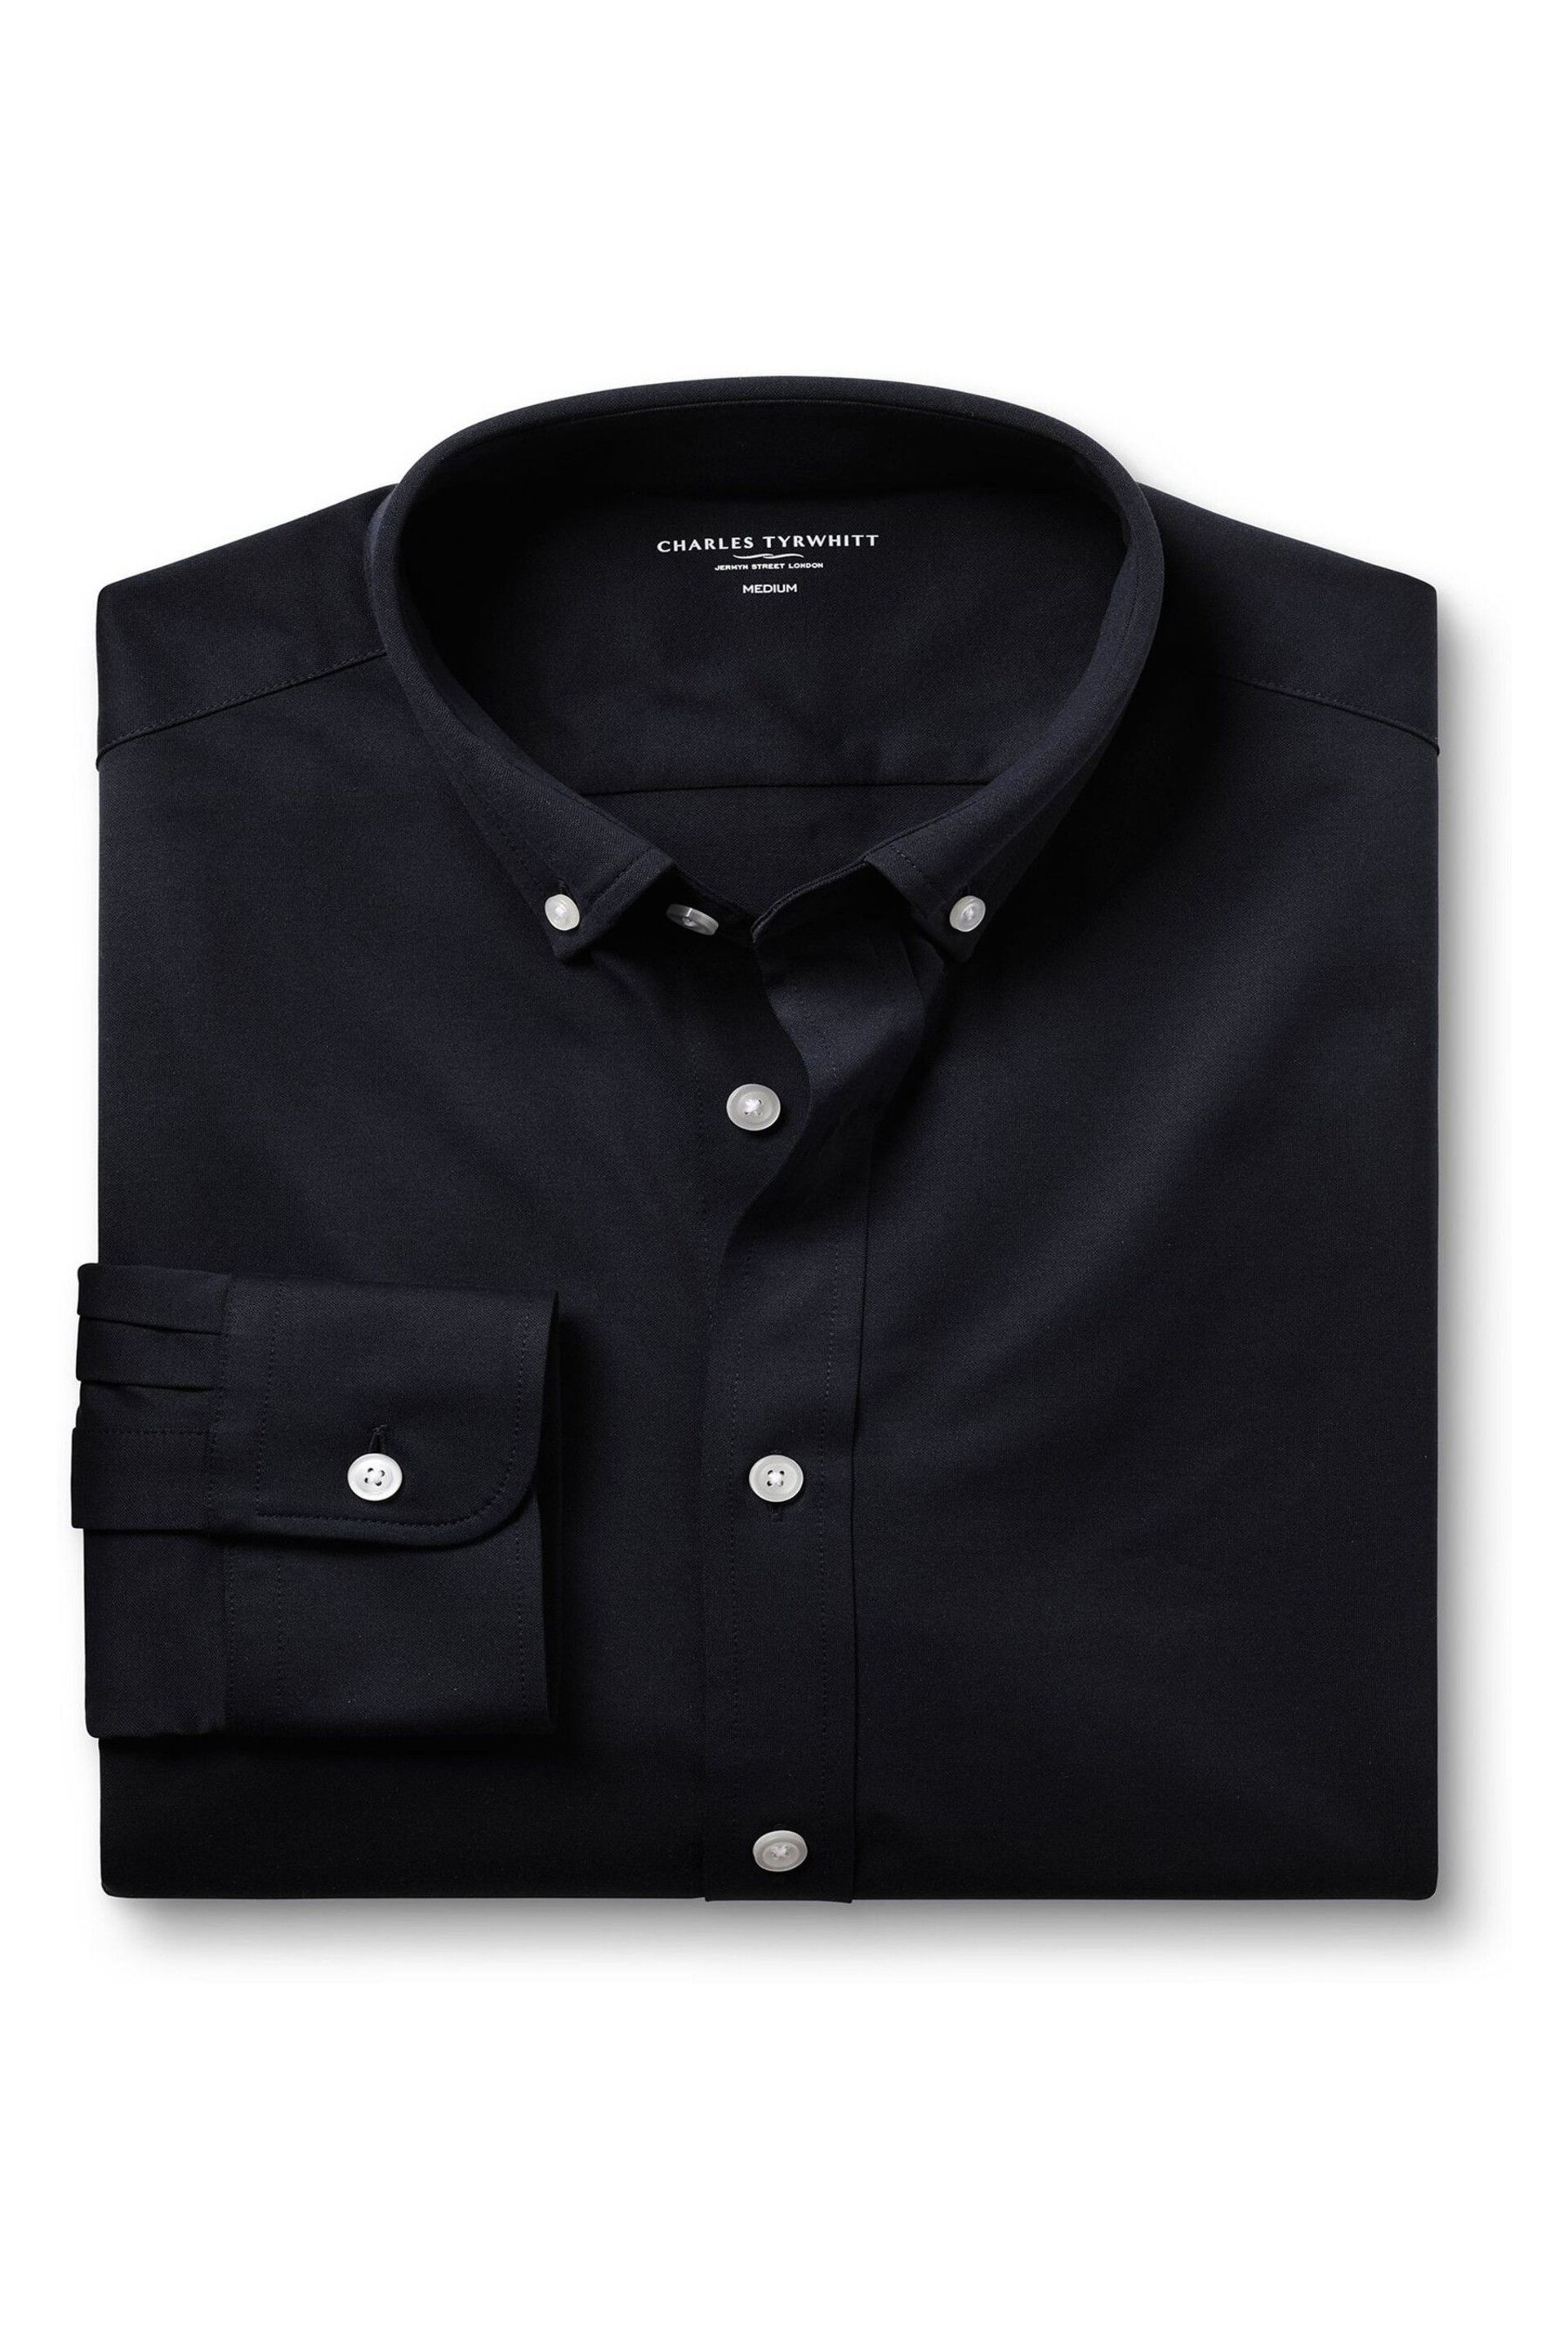 Charles Tyrwhitt Blue Dark Four Way Stretch Button Down Jersey Shirt - Image 4 of 6